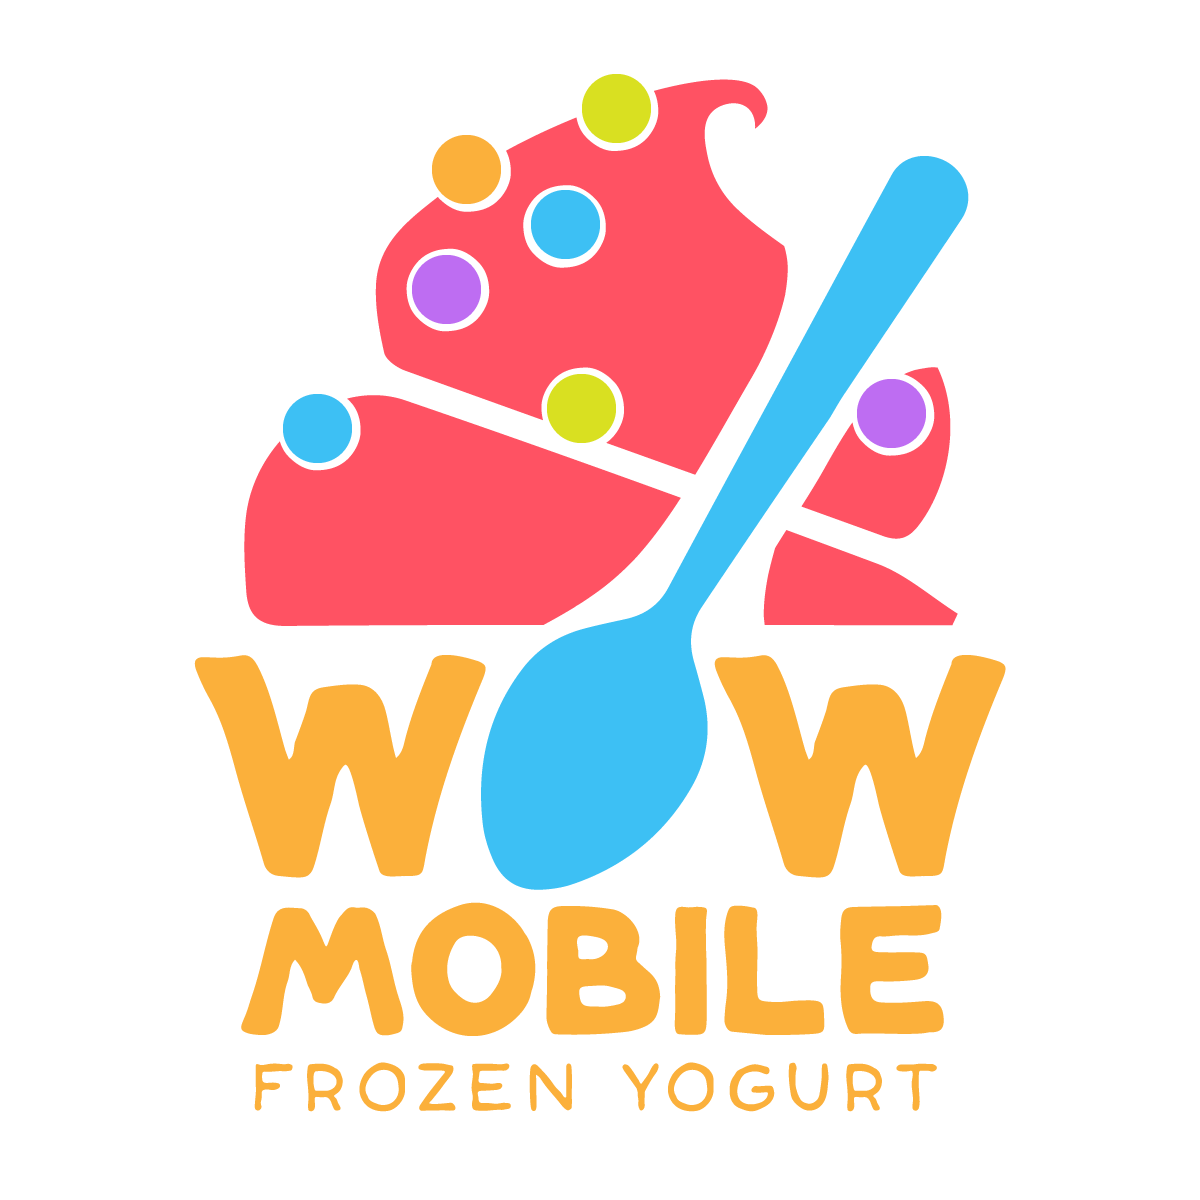 Frozen Yogurt Logo - Wow! Mobile Frozen Yogurt!